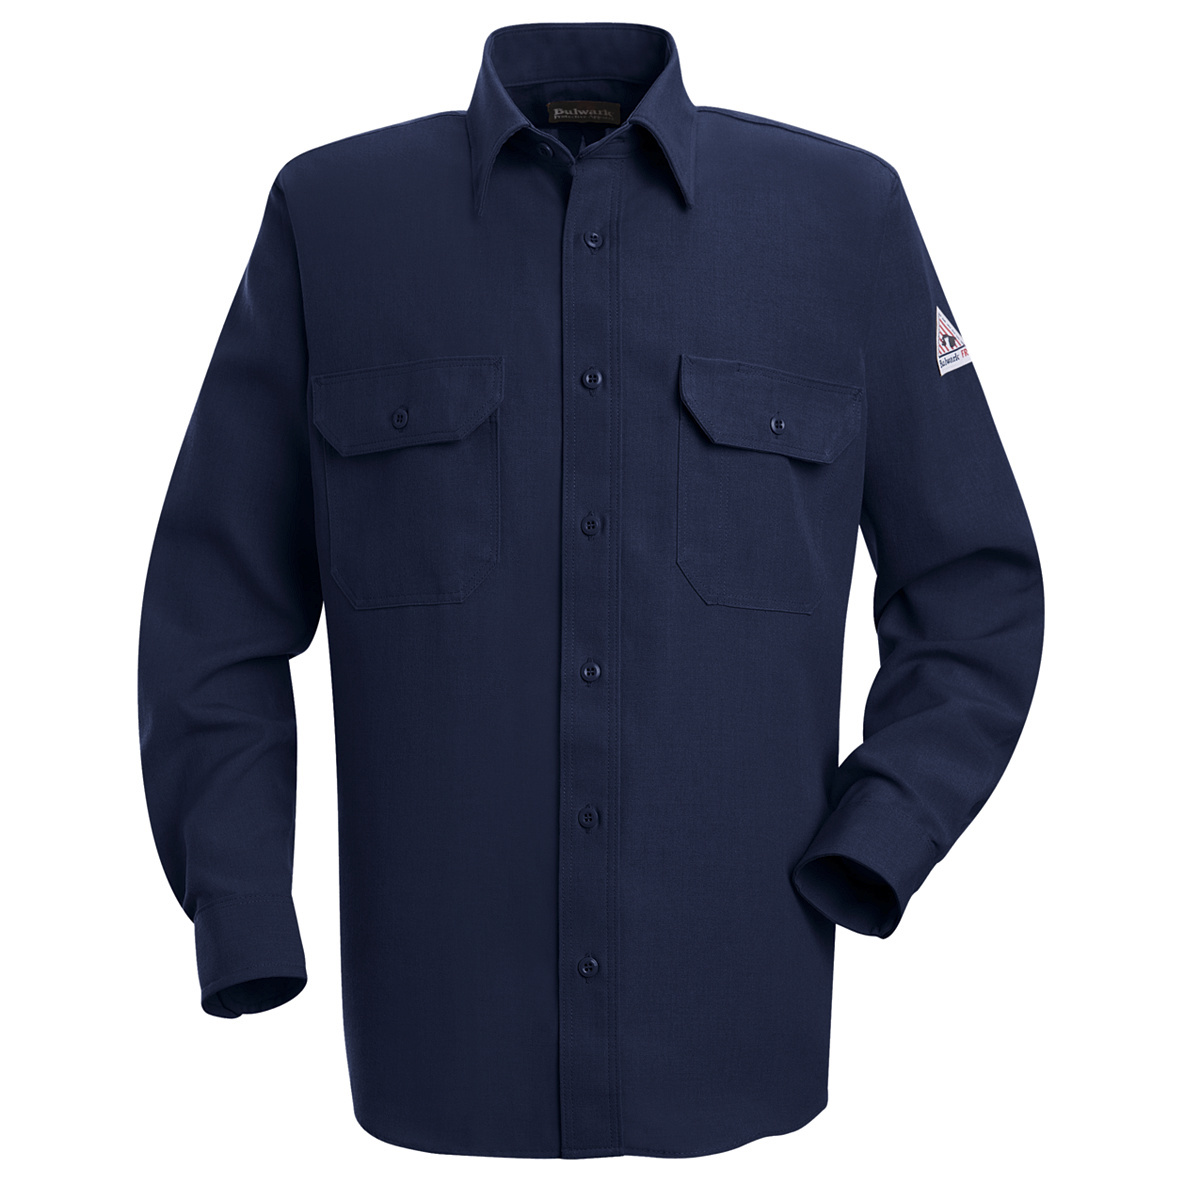 Bulwark® 2X Tall Navy Blue Nomex® IIIA/Nomex® Aramid/Kevlar® Aramid Flame Resistant Uniform Shirt With Button Front Closure